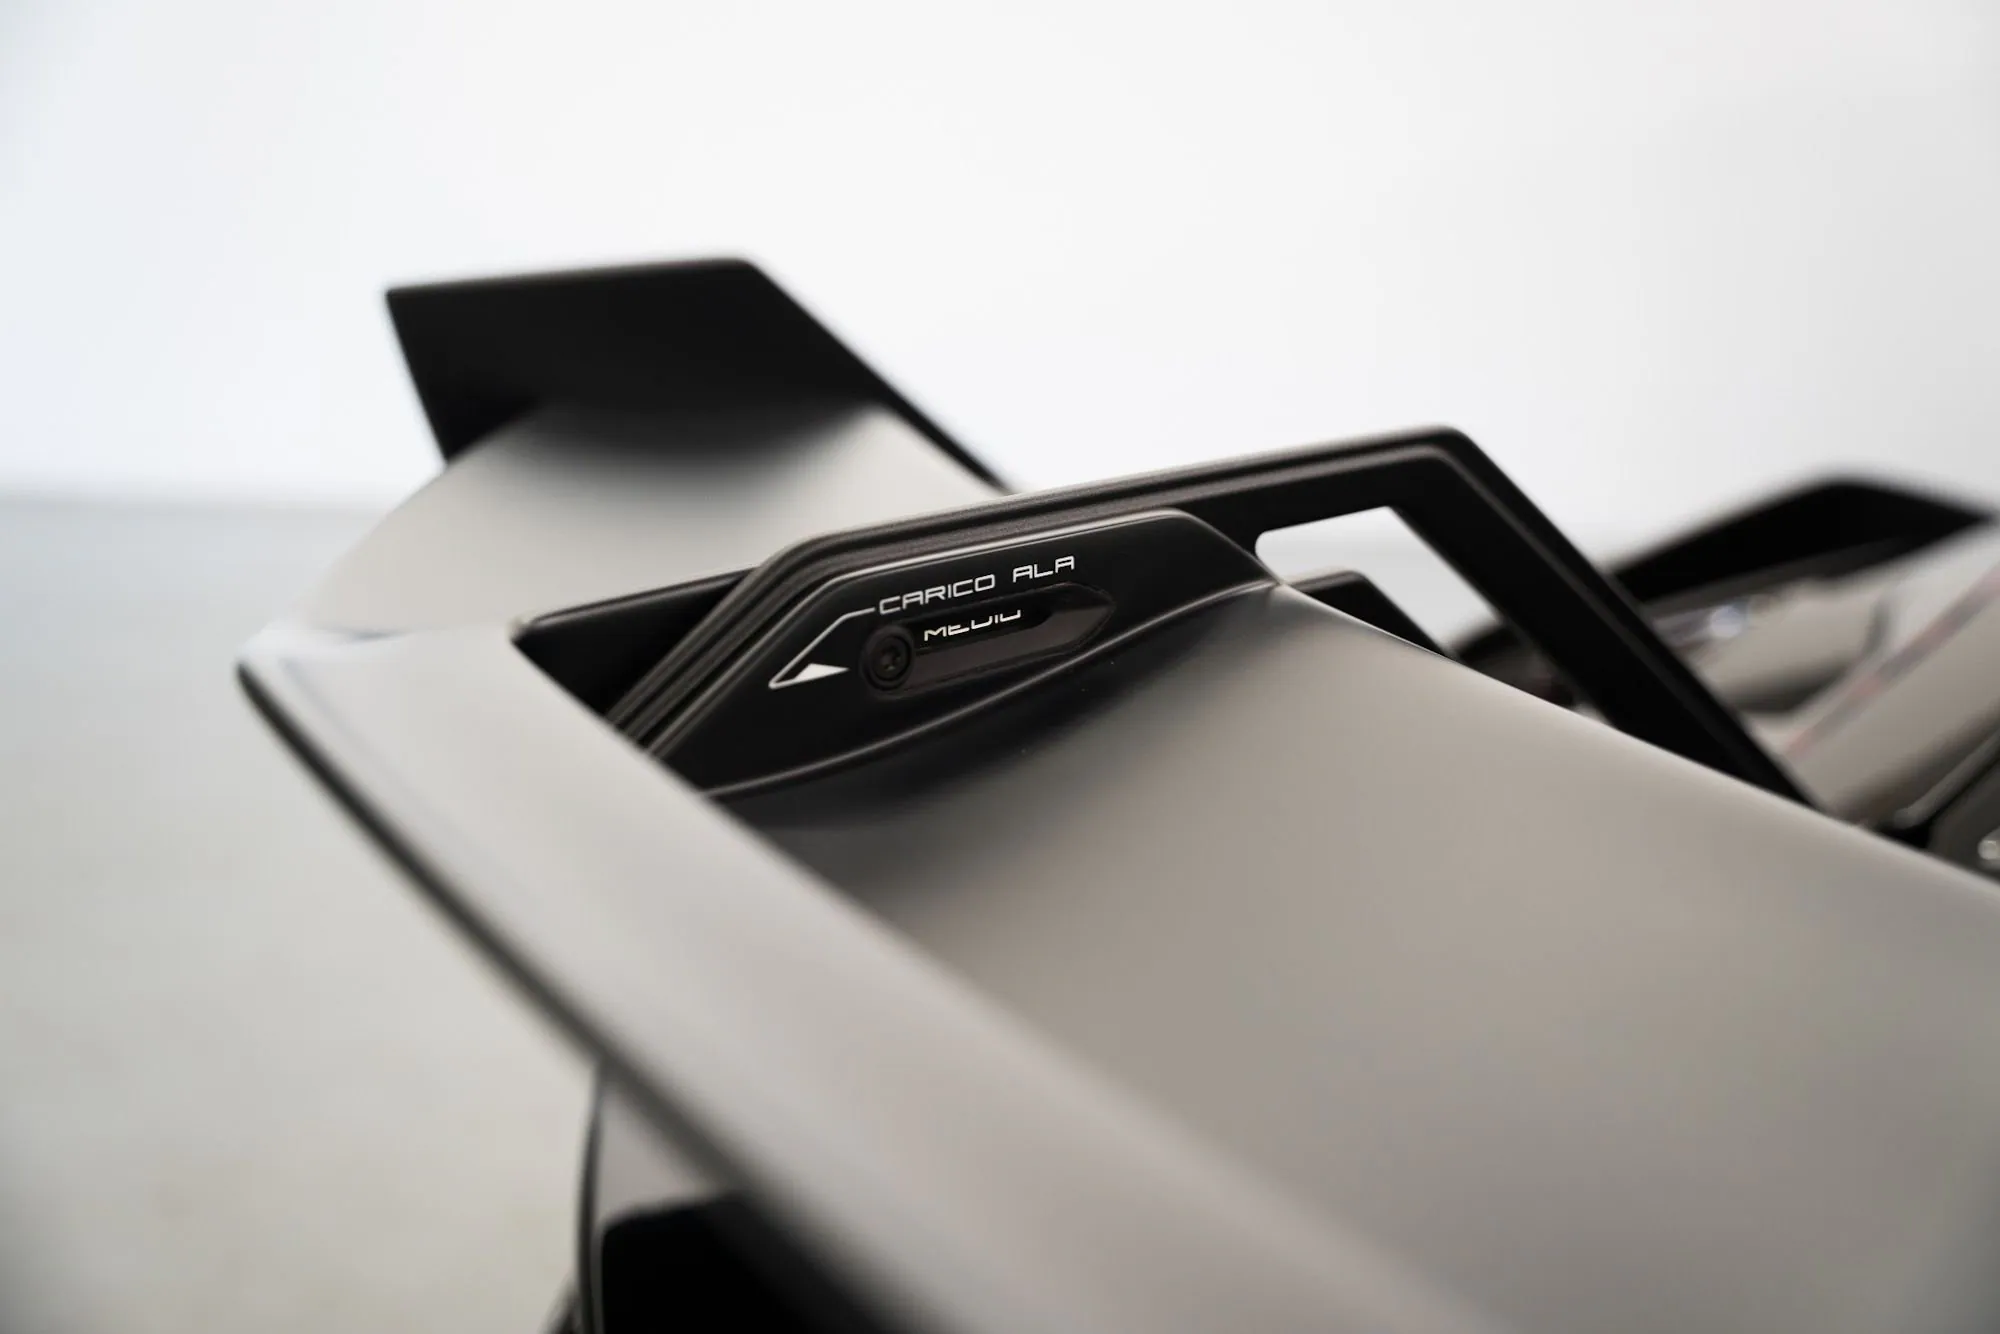 2022 Lamborghini Huracan STO coupe (5)